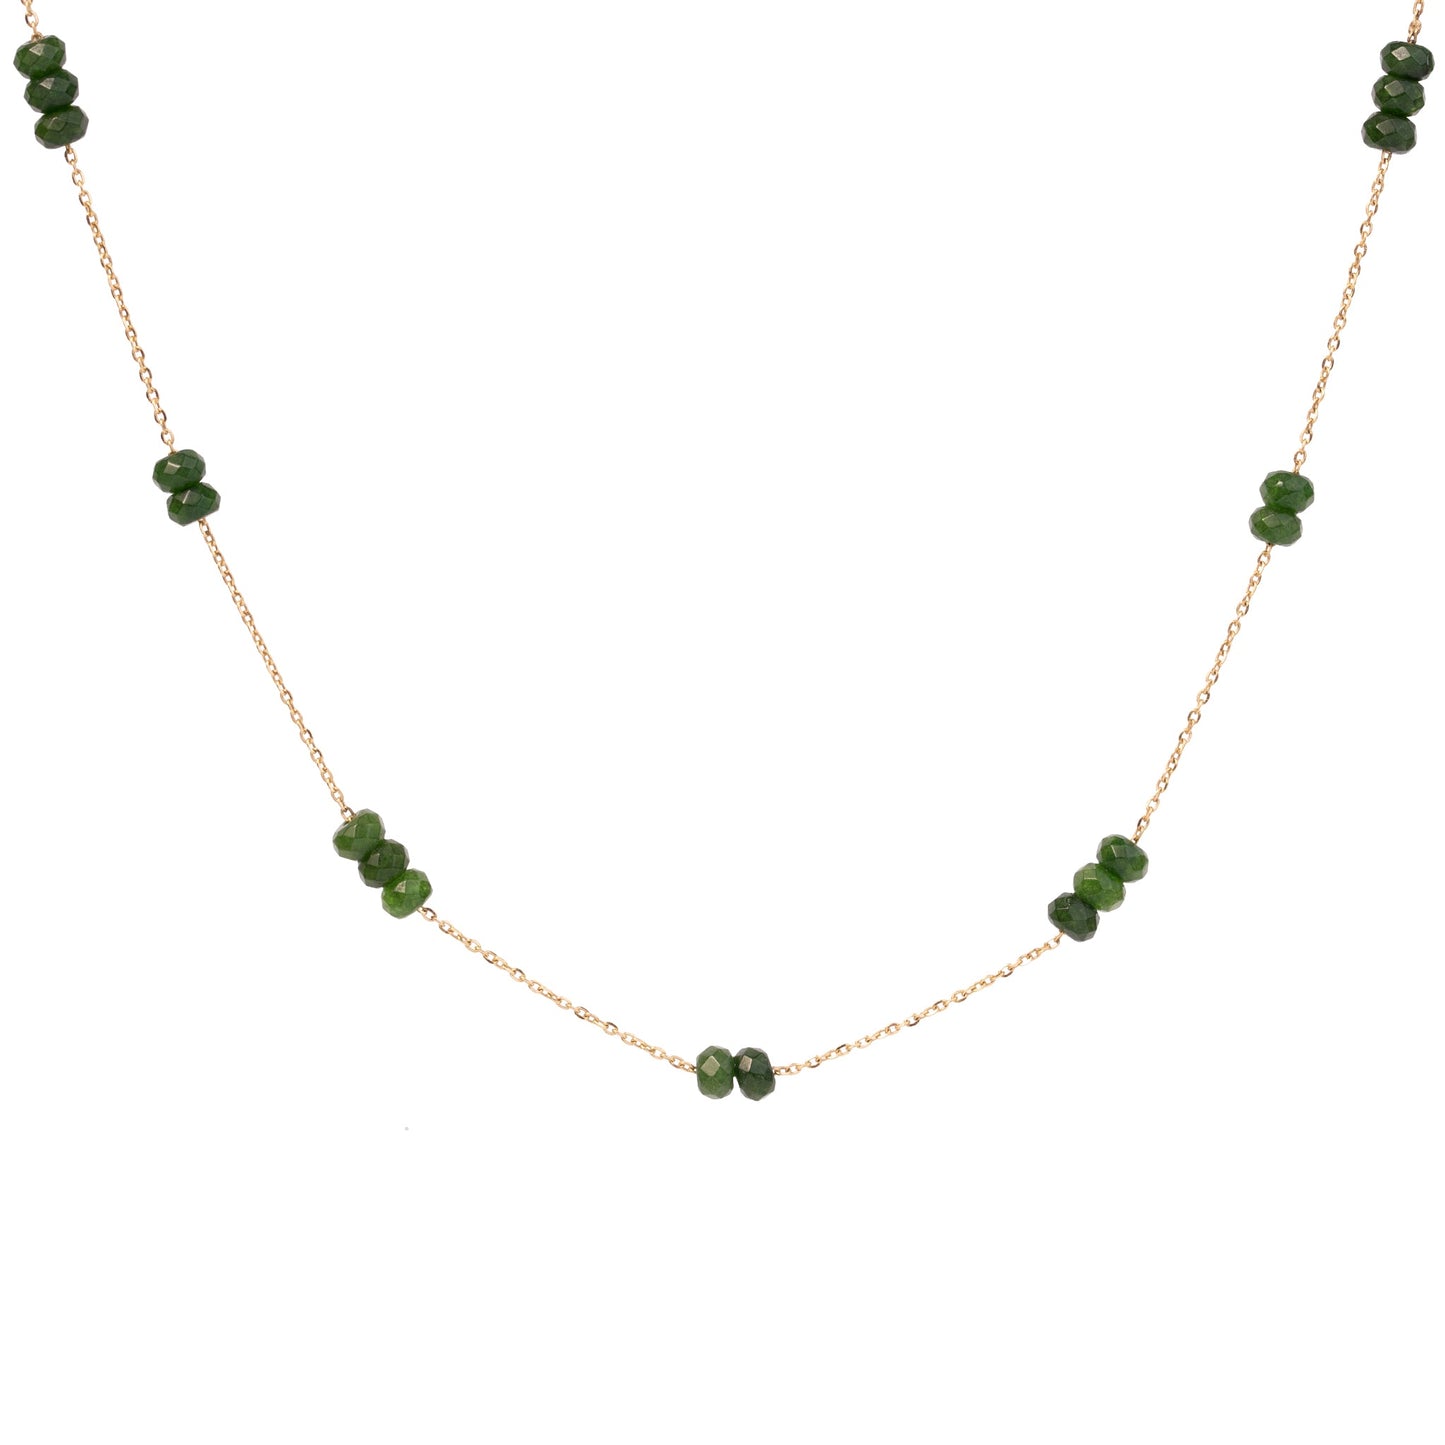 The Emerald Green Choker - Oria.jewelry